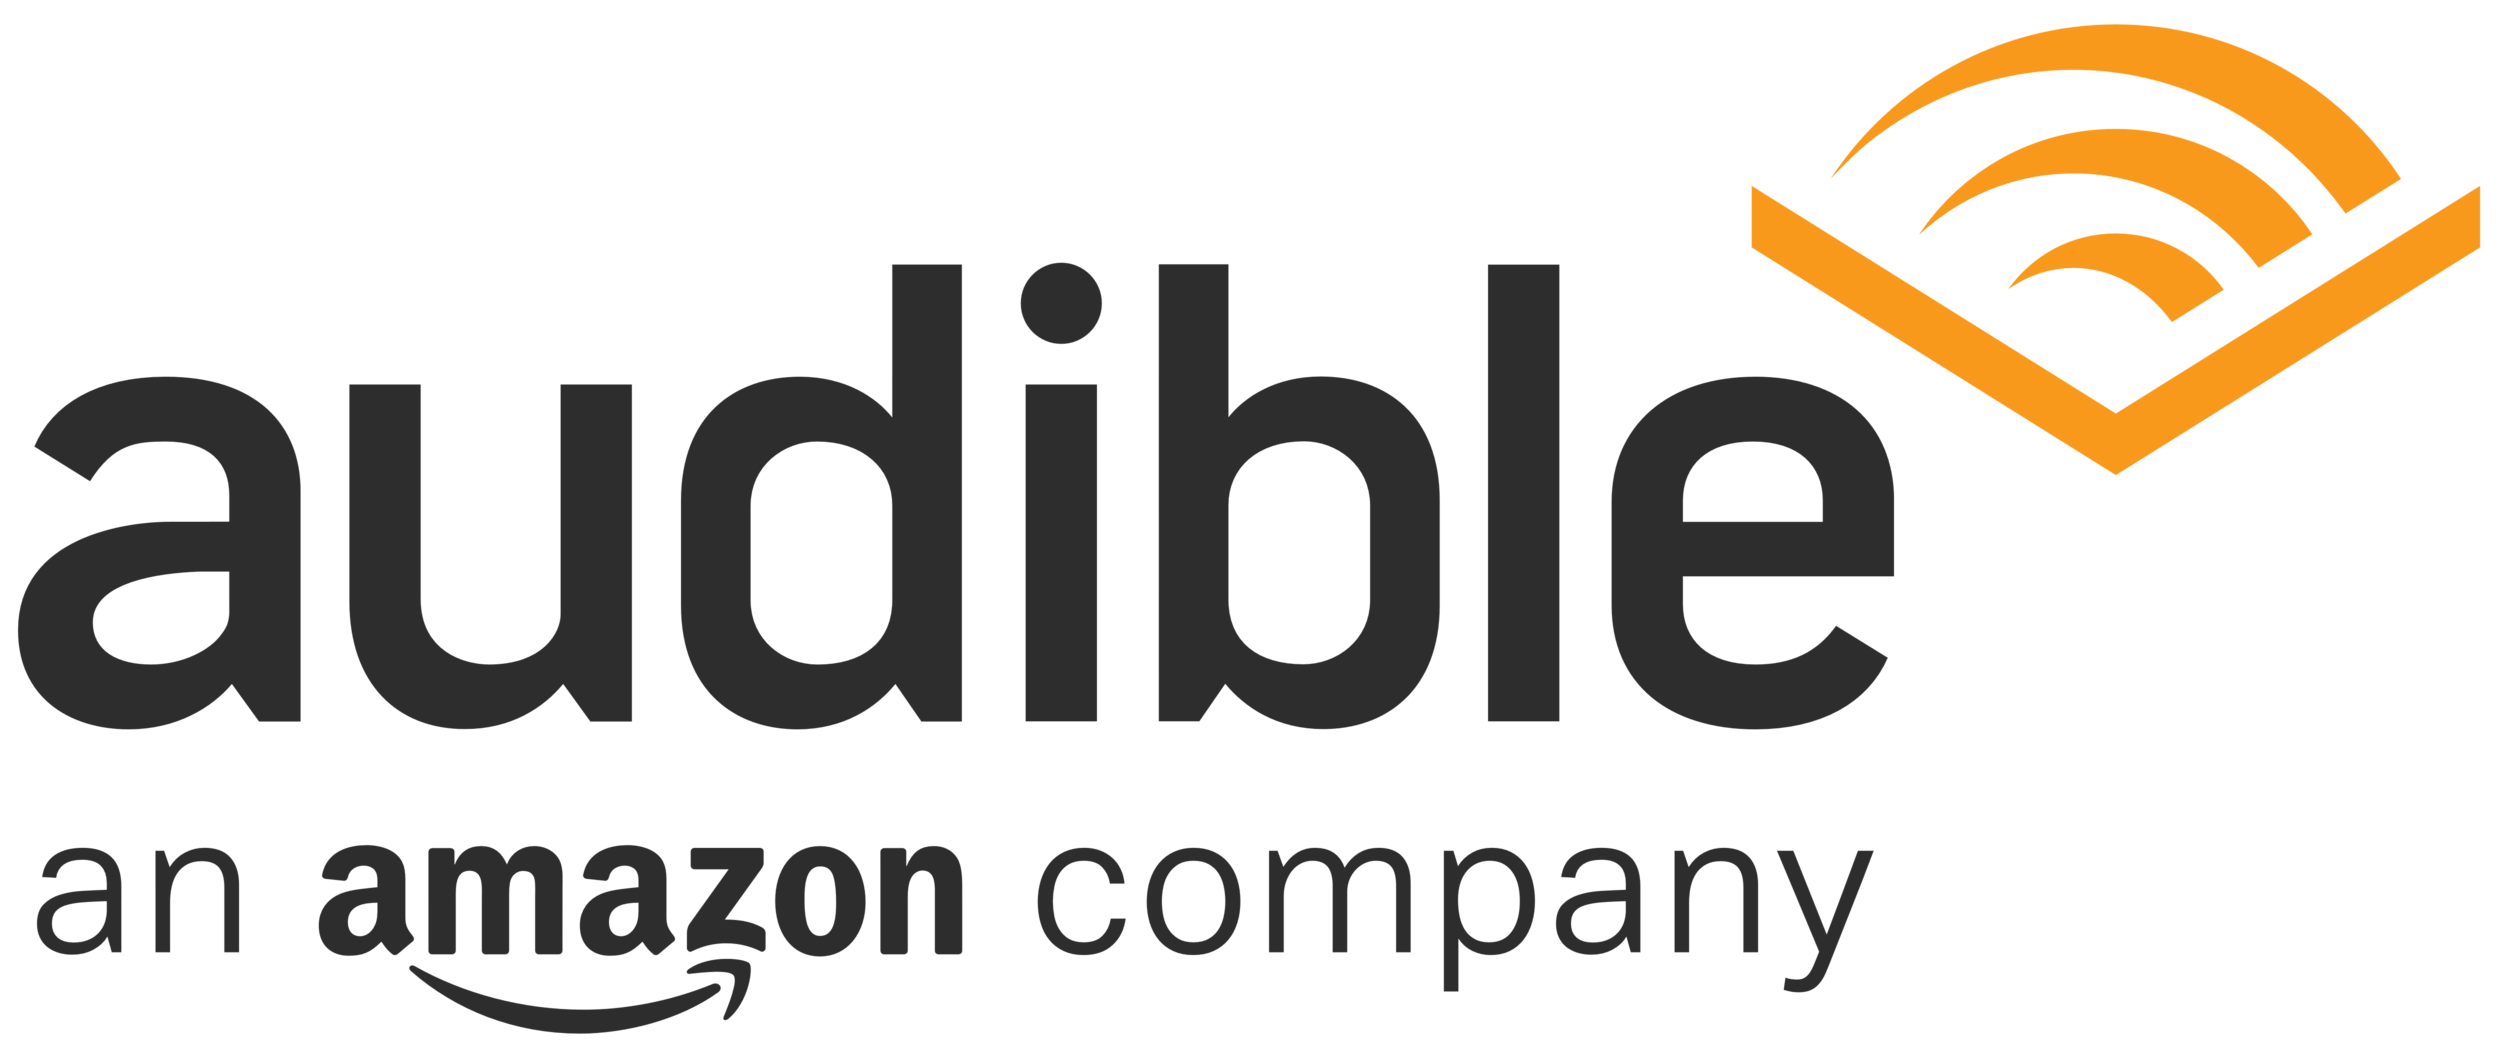 Audible_logo_an_Amazon_company.png